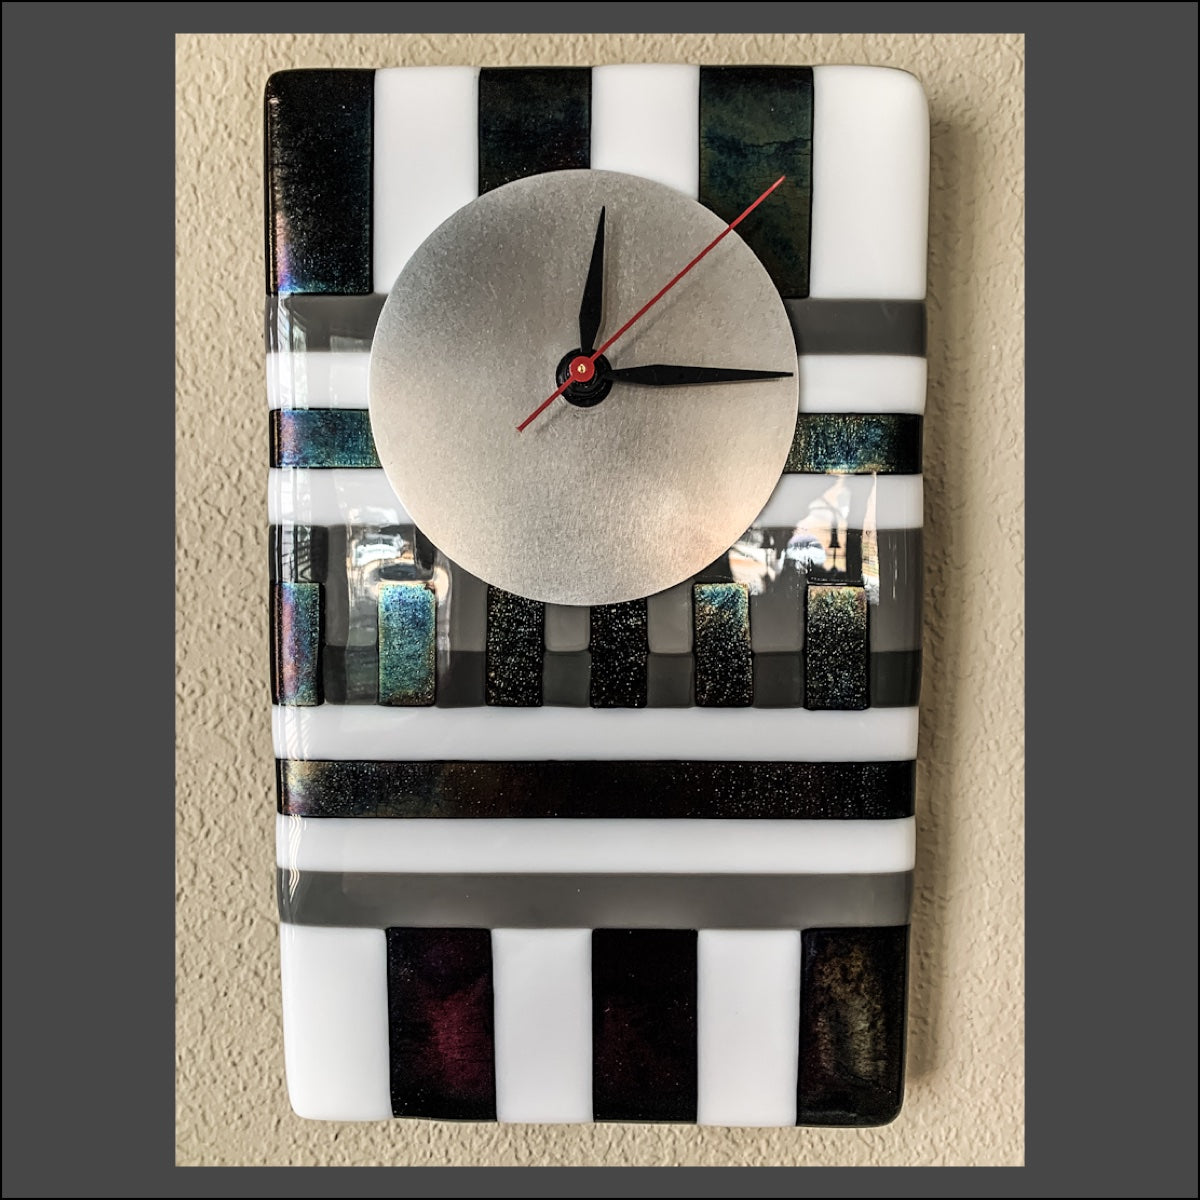 paper or plastic wall clock